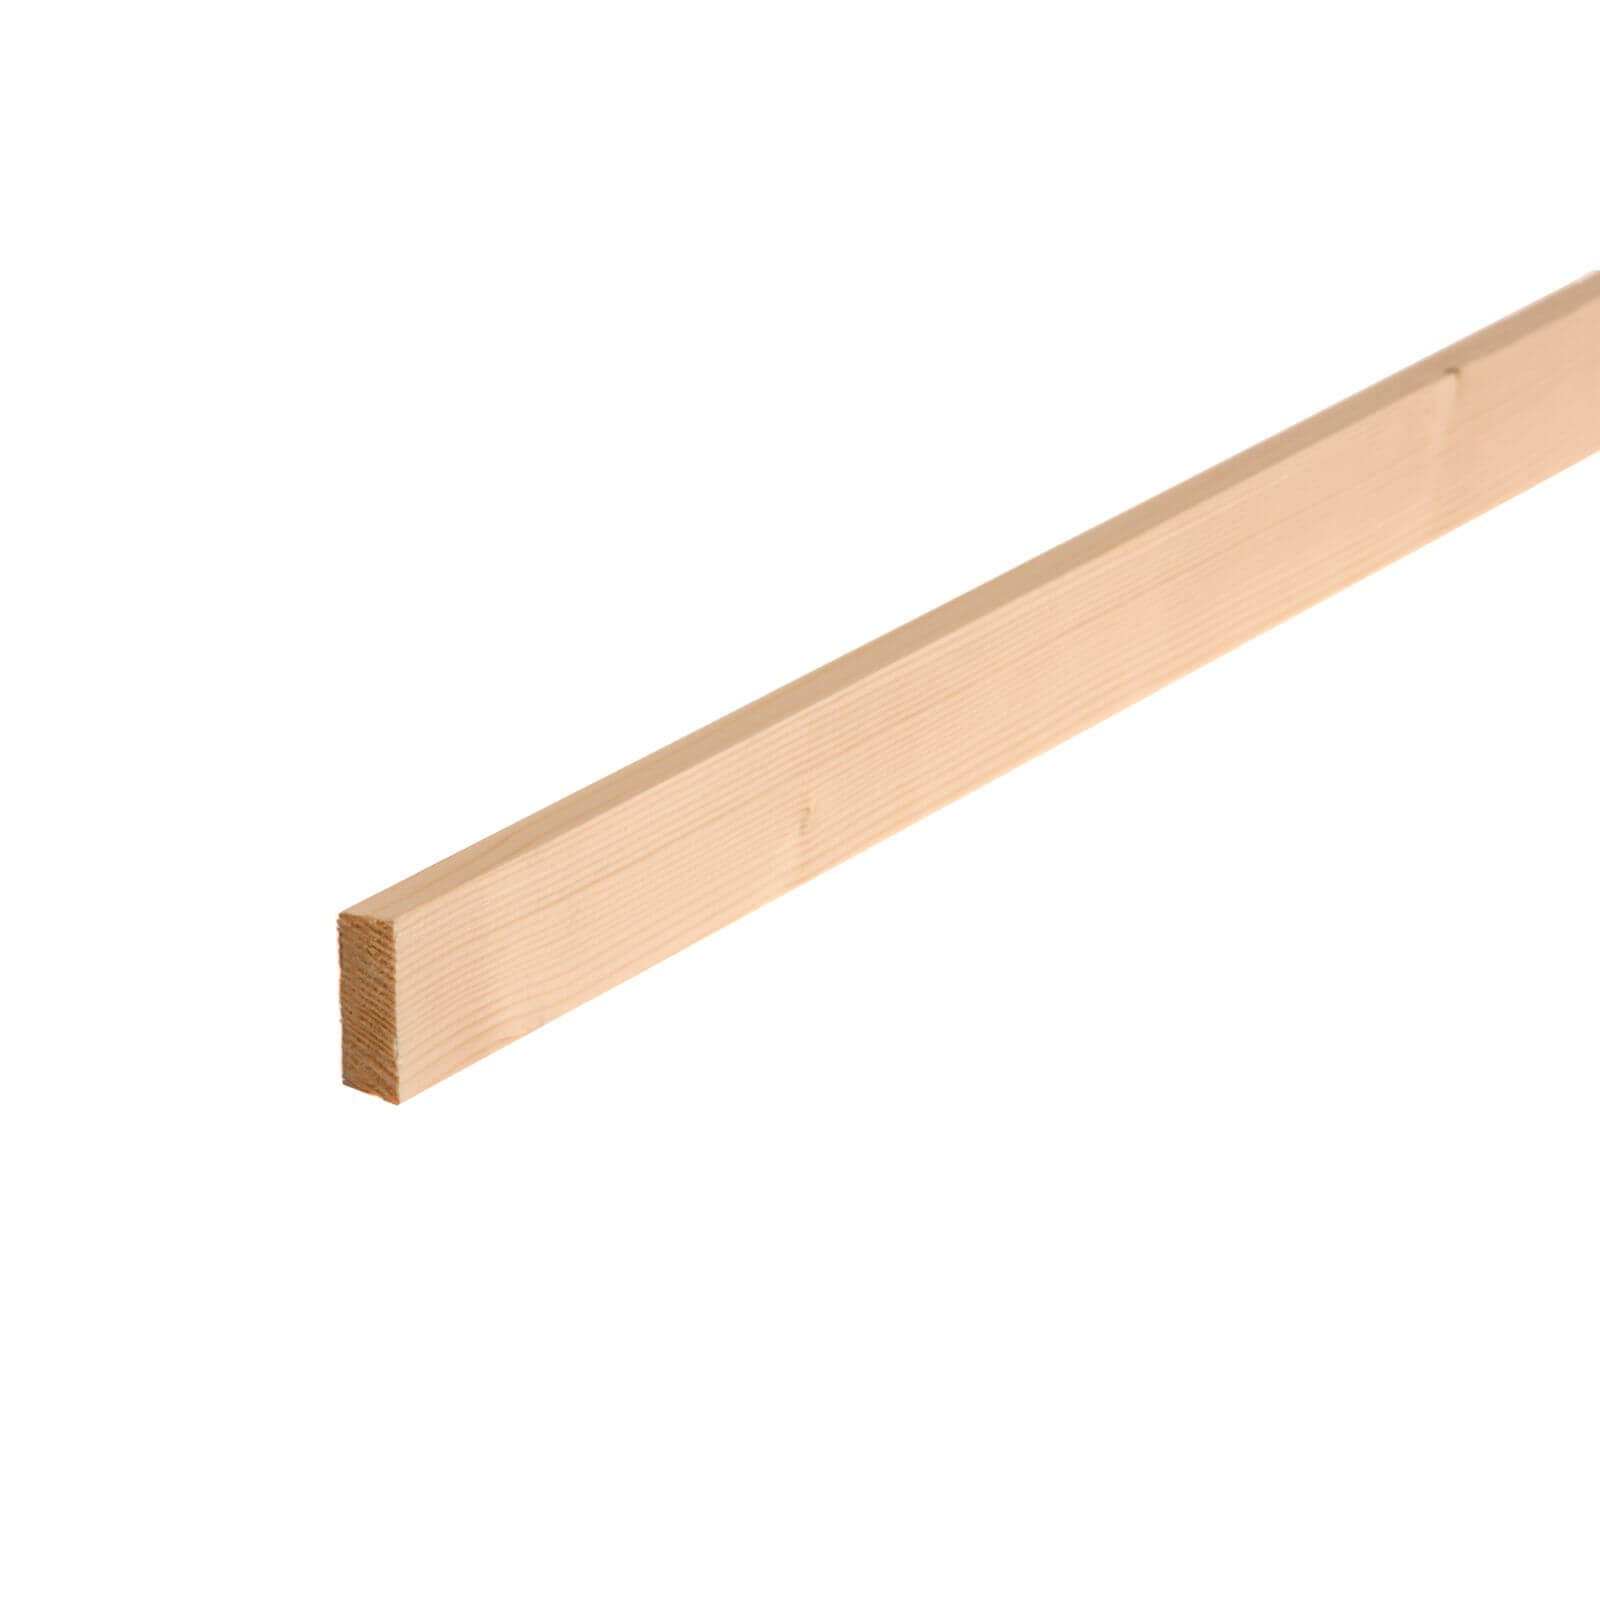 Metsa Planed Square Edge Stick Softwood Timber 2.1m (12 x 32 x 2100mm)